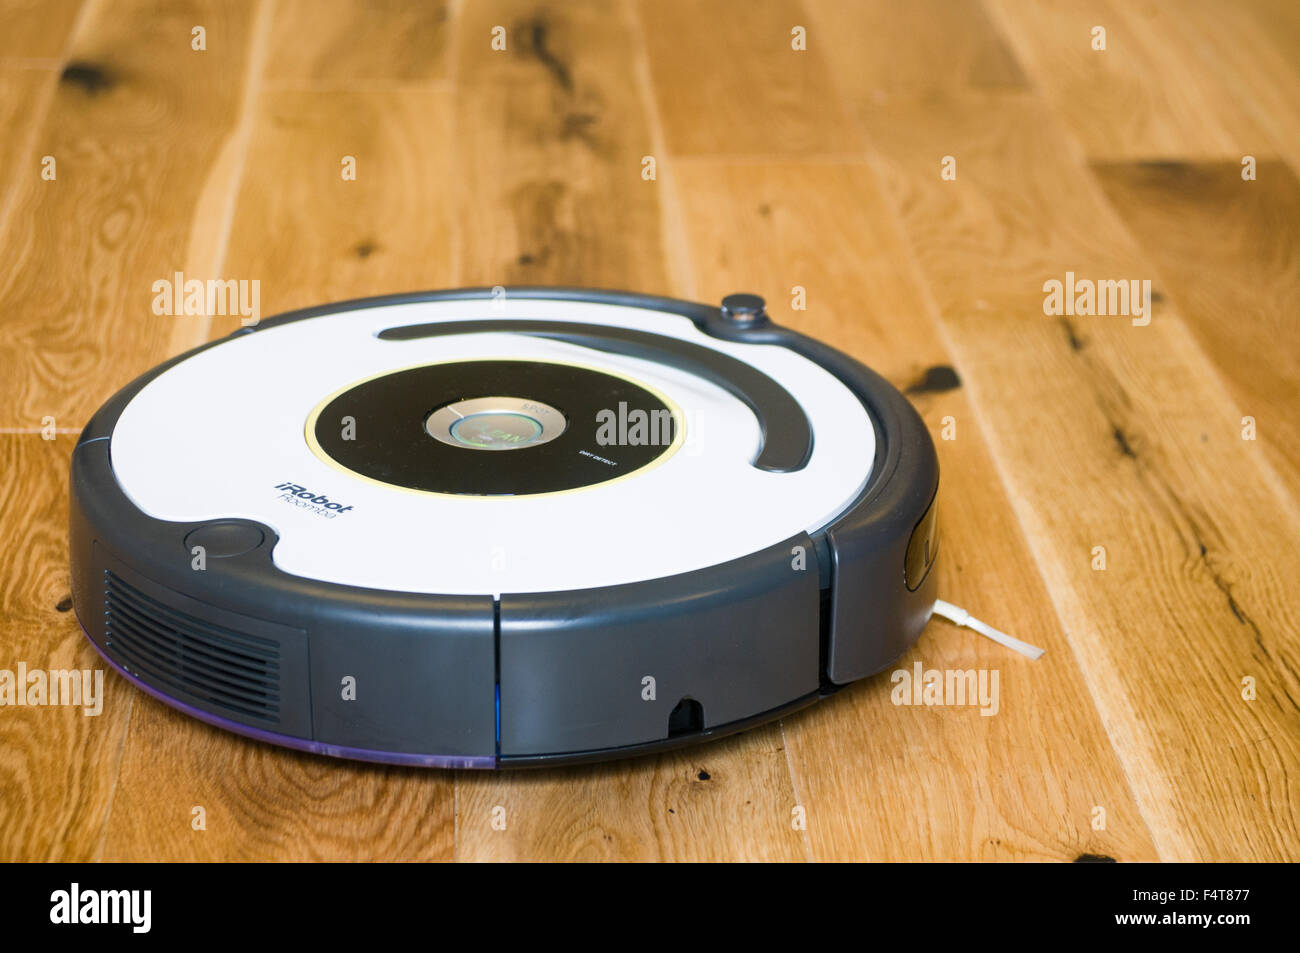 An iRobot Roomba robotic vacuum cleaner cleaning a wooden living room floor Stock Photo